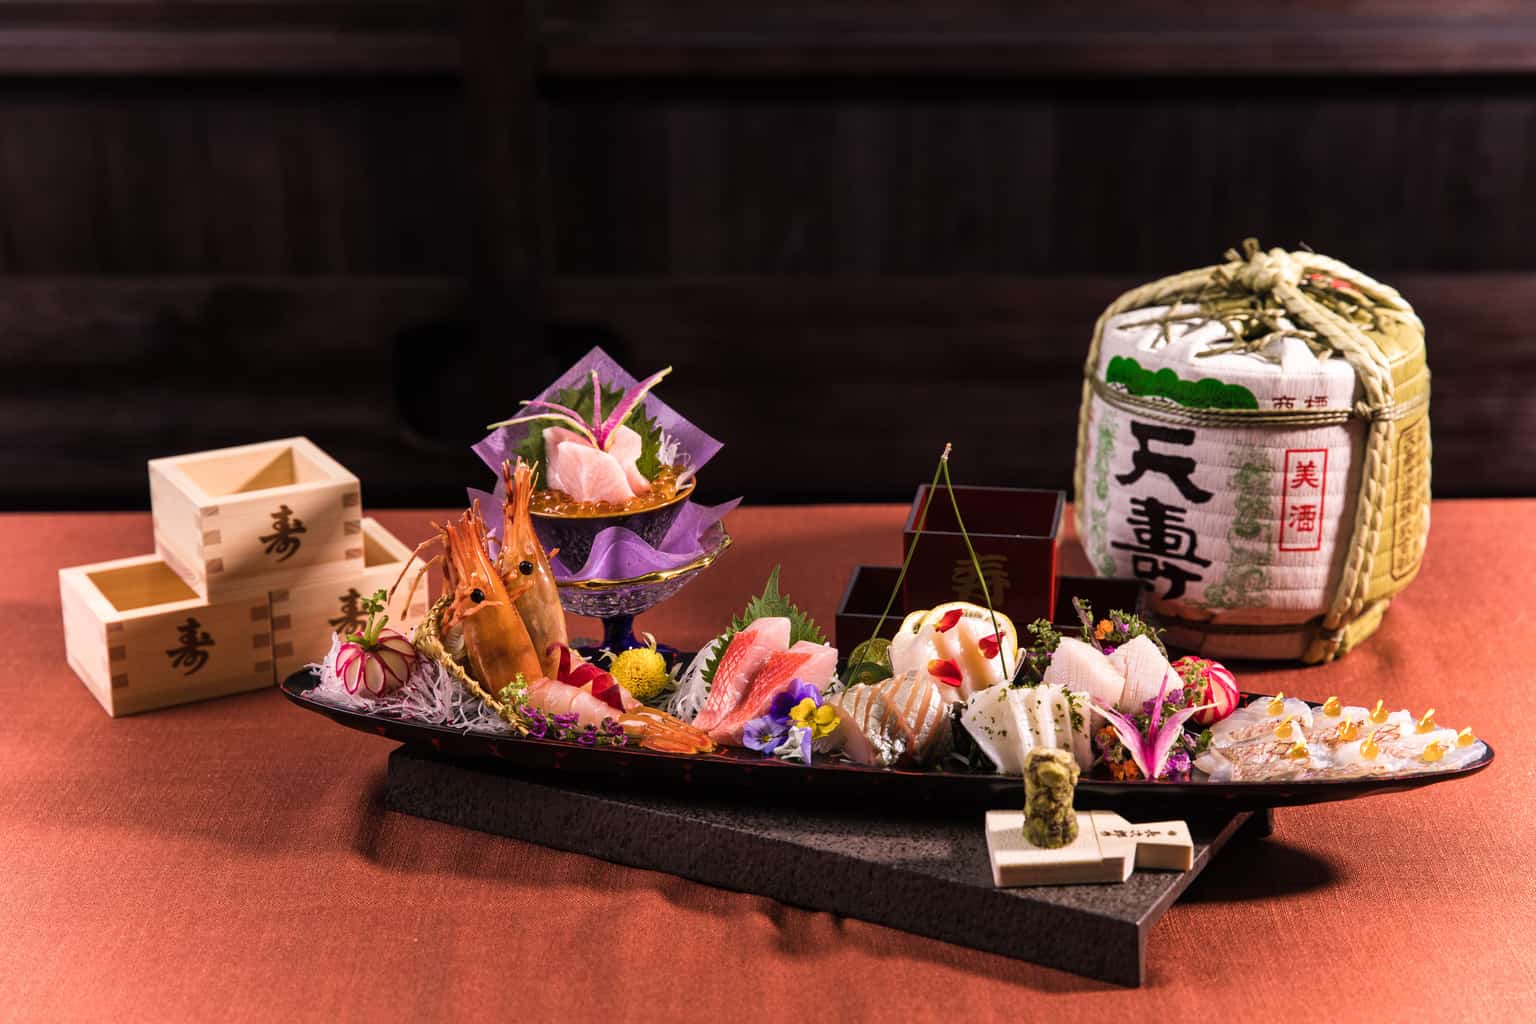 Featured image for “Nadagogo Japanese Restaurant Pre-Opening at Wyndham Grand Shenzhen”